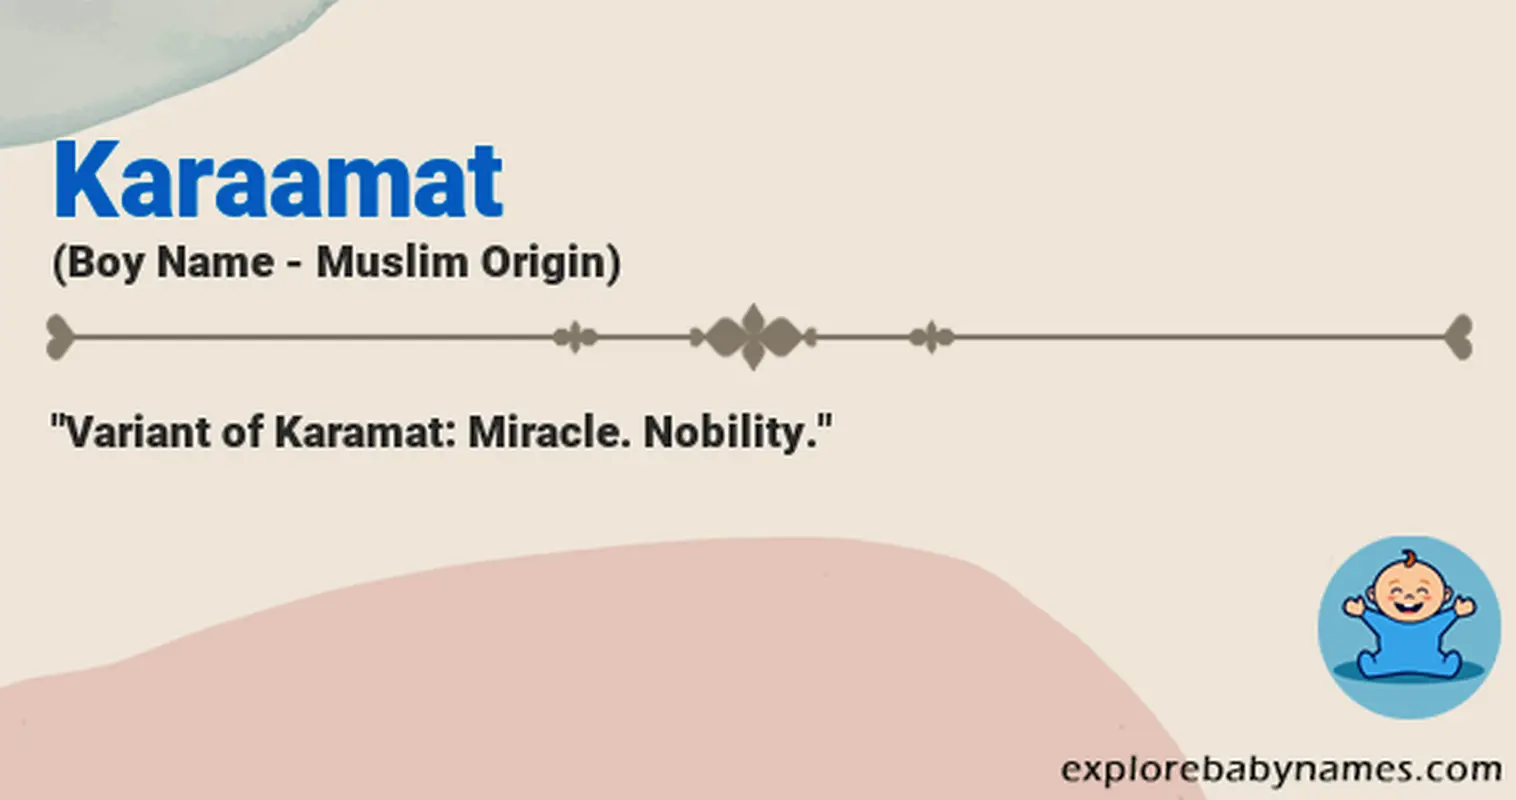 Meaning of Karaamat